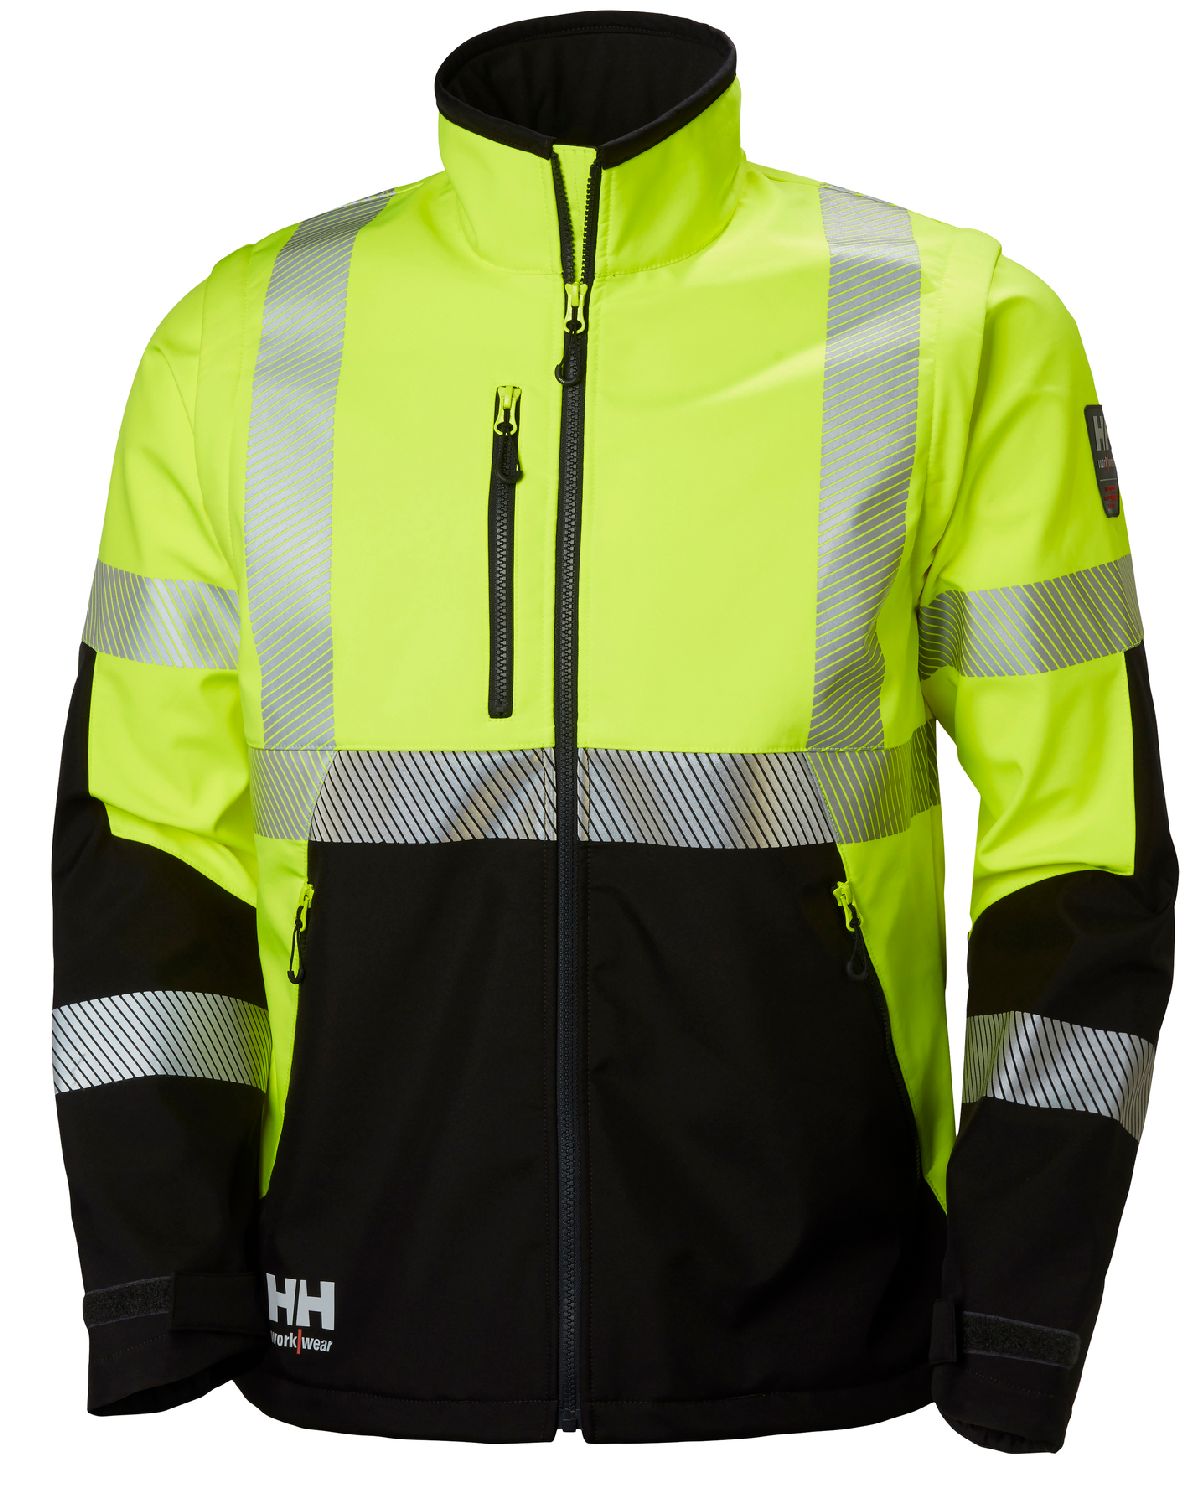 Helly Hansen Jacke 74272 Icu Softshell Jacket 369 EN471 Yellow/Black